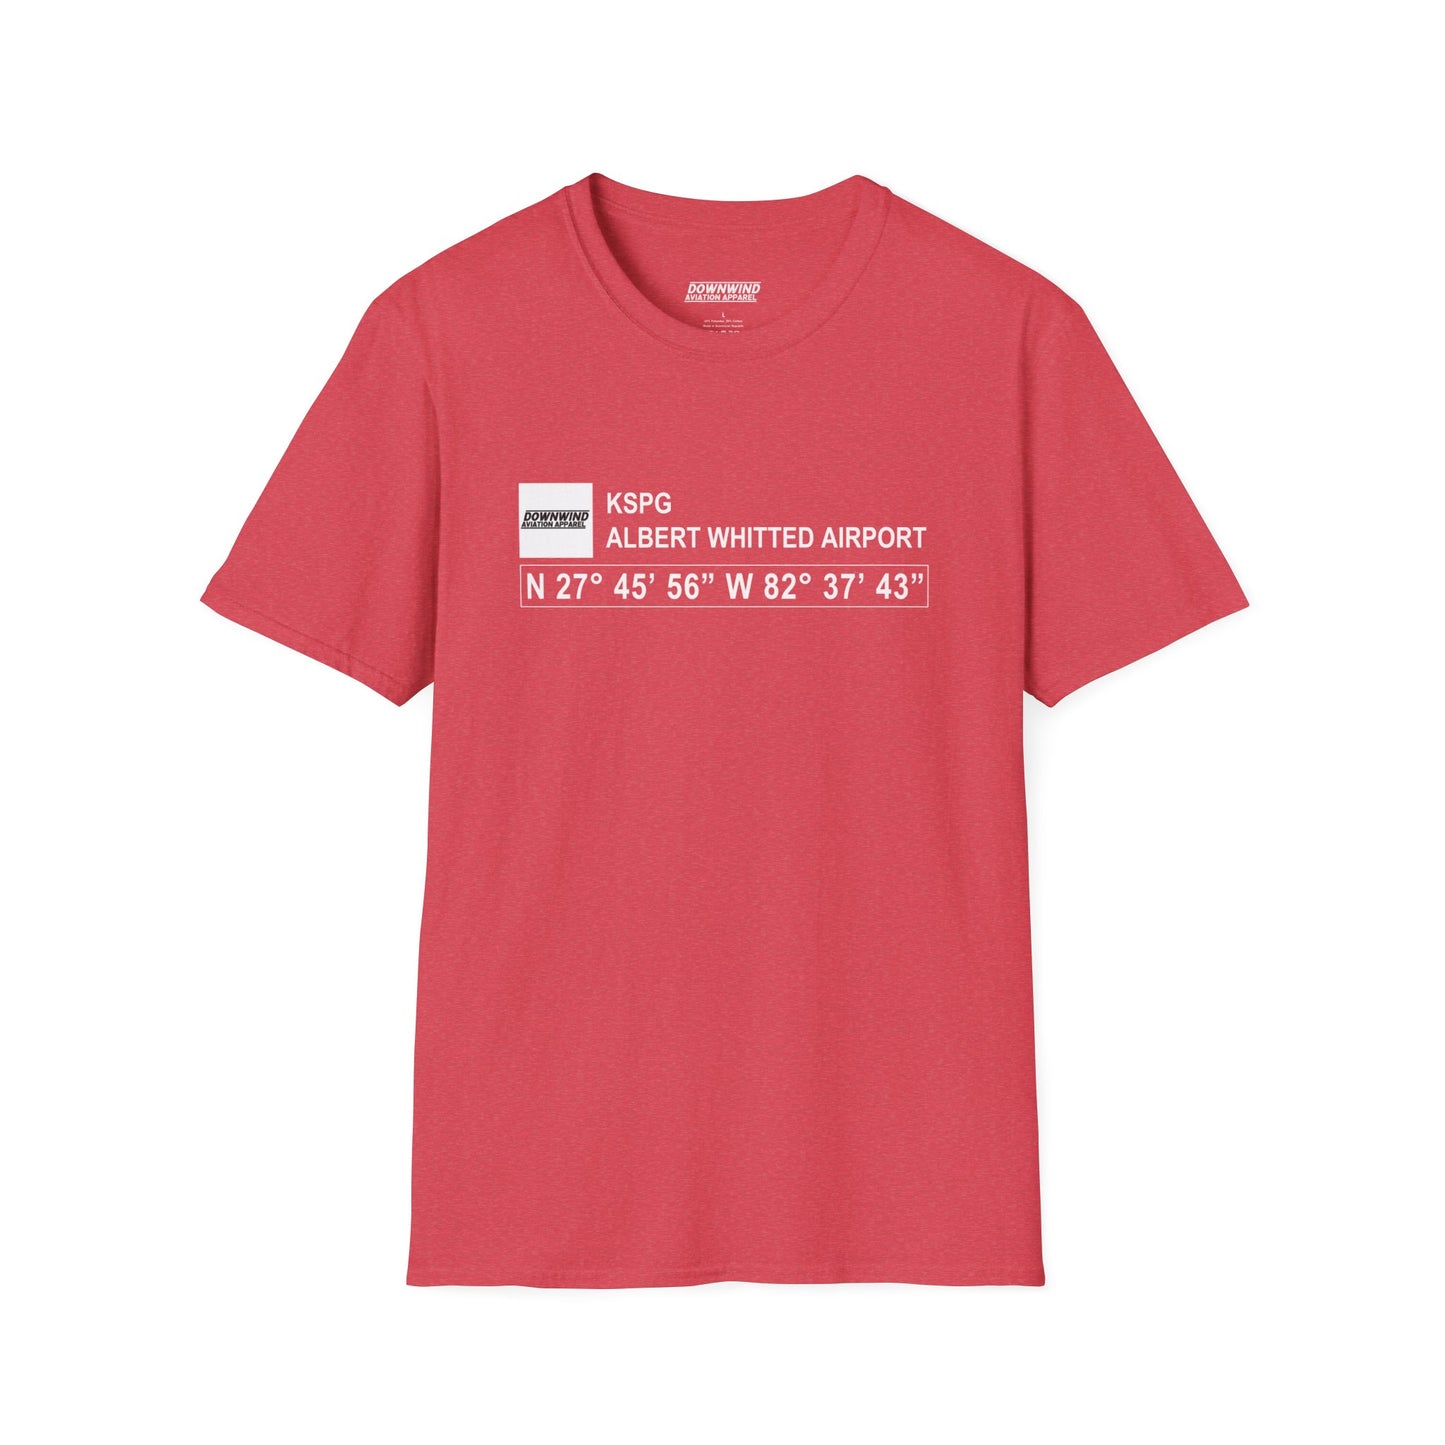 KSPG / Albert Whitted Airport T-Shirt